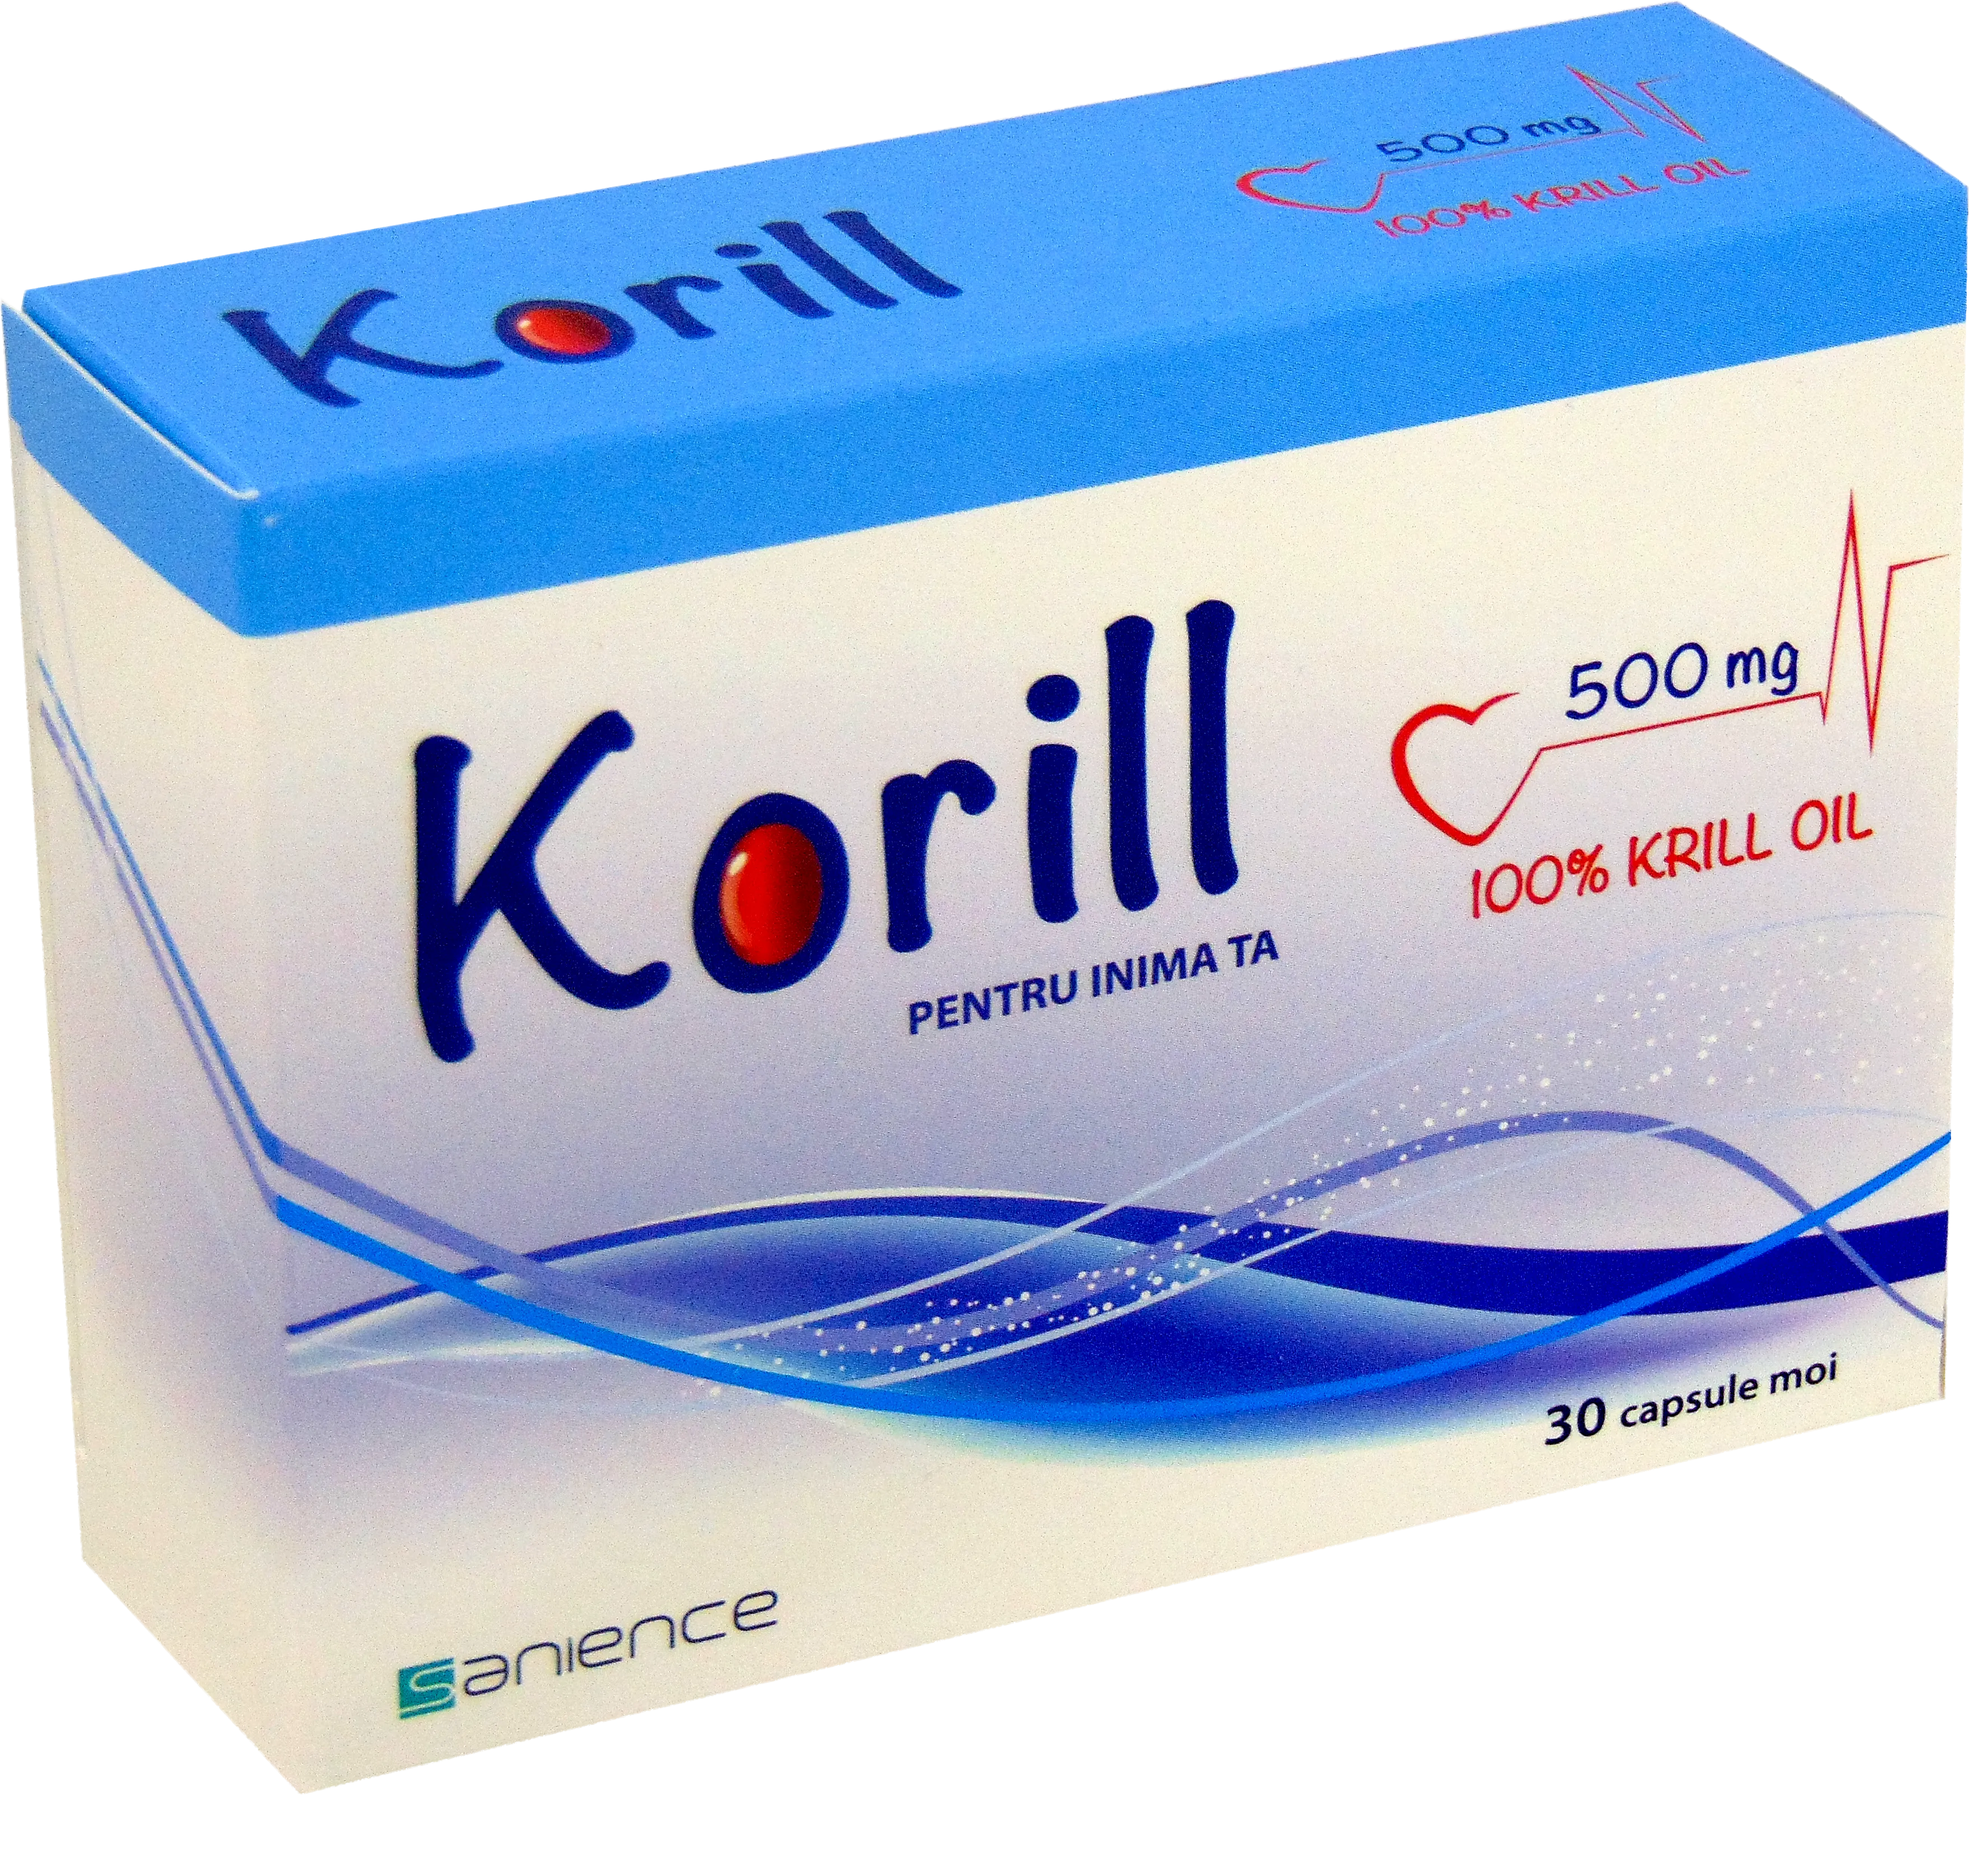 Cardiologie - Korill 500mg x 30 capsule moi, medik-on.ro